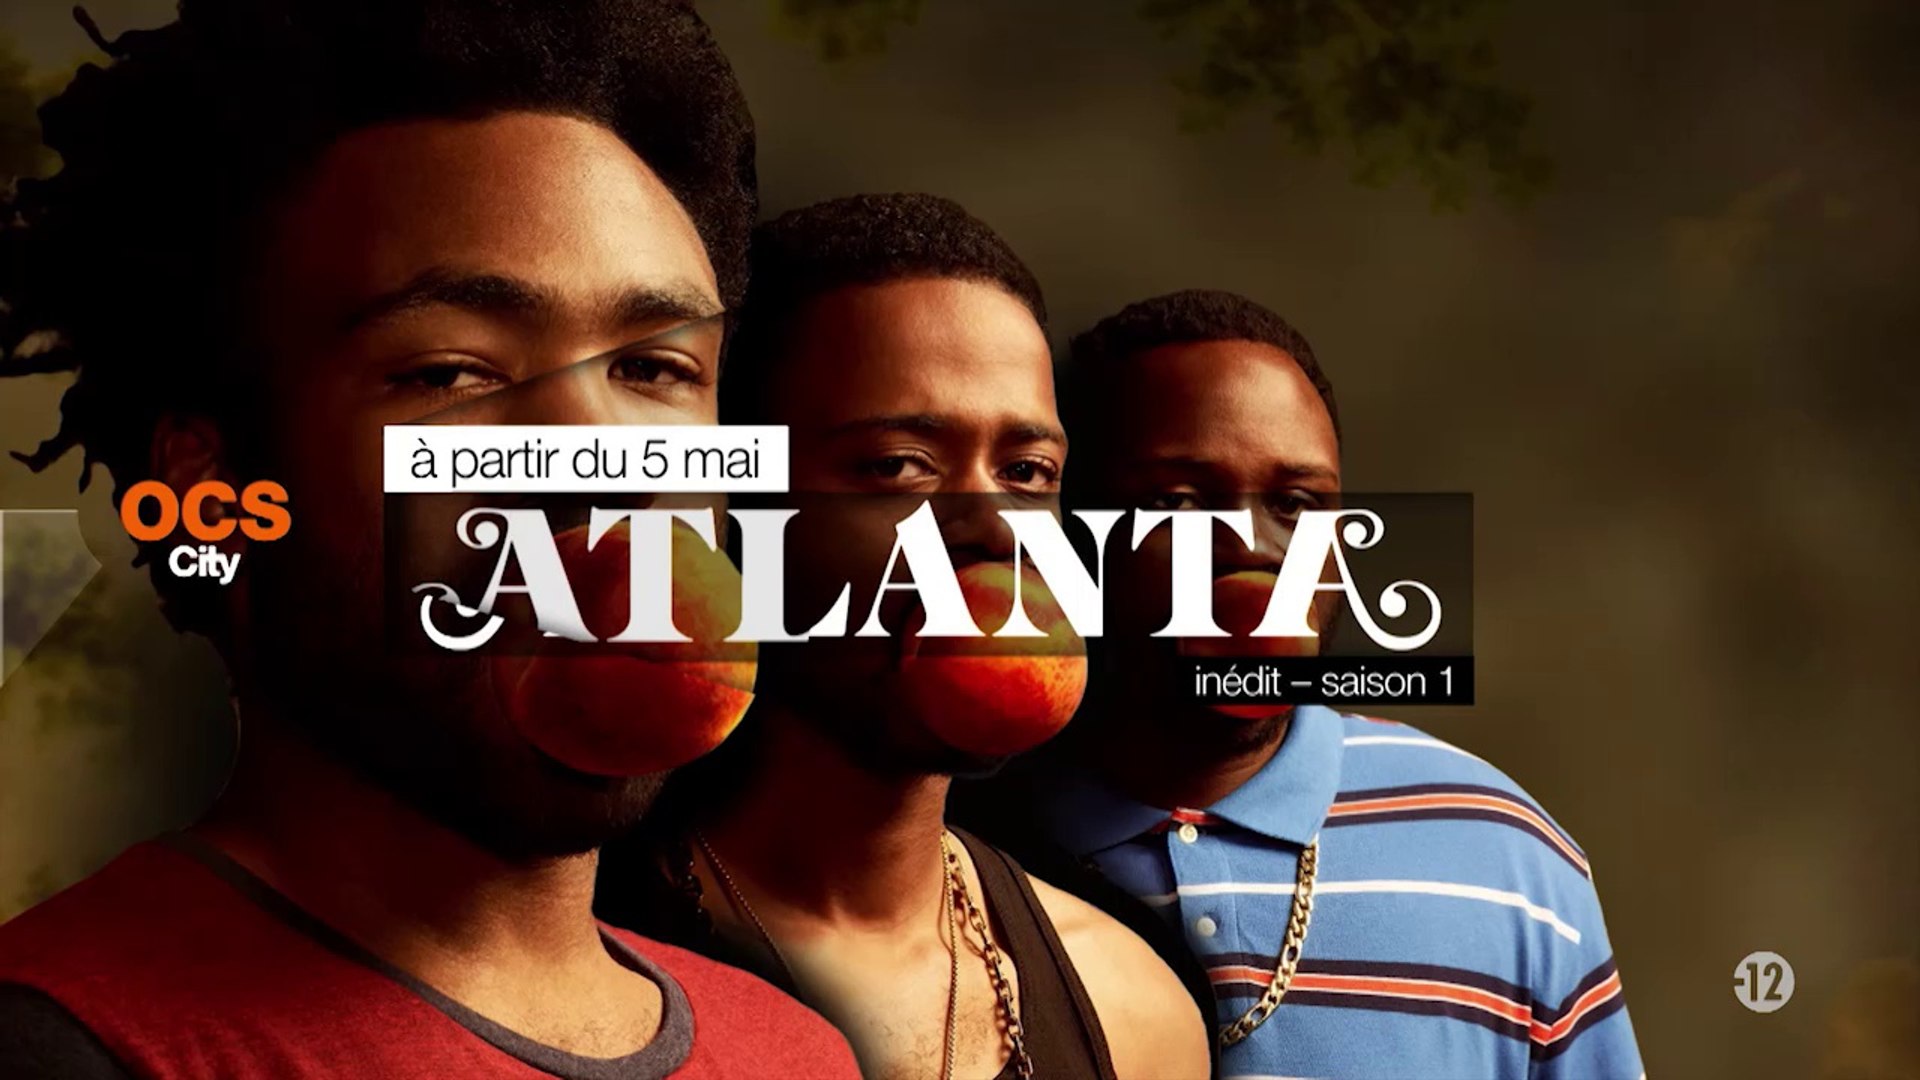 Atlanta - saison 1 inédite en mai sur OCS - Vidéo Dailymotion